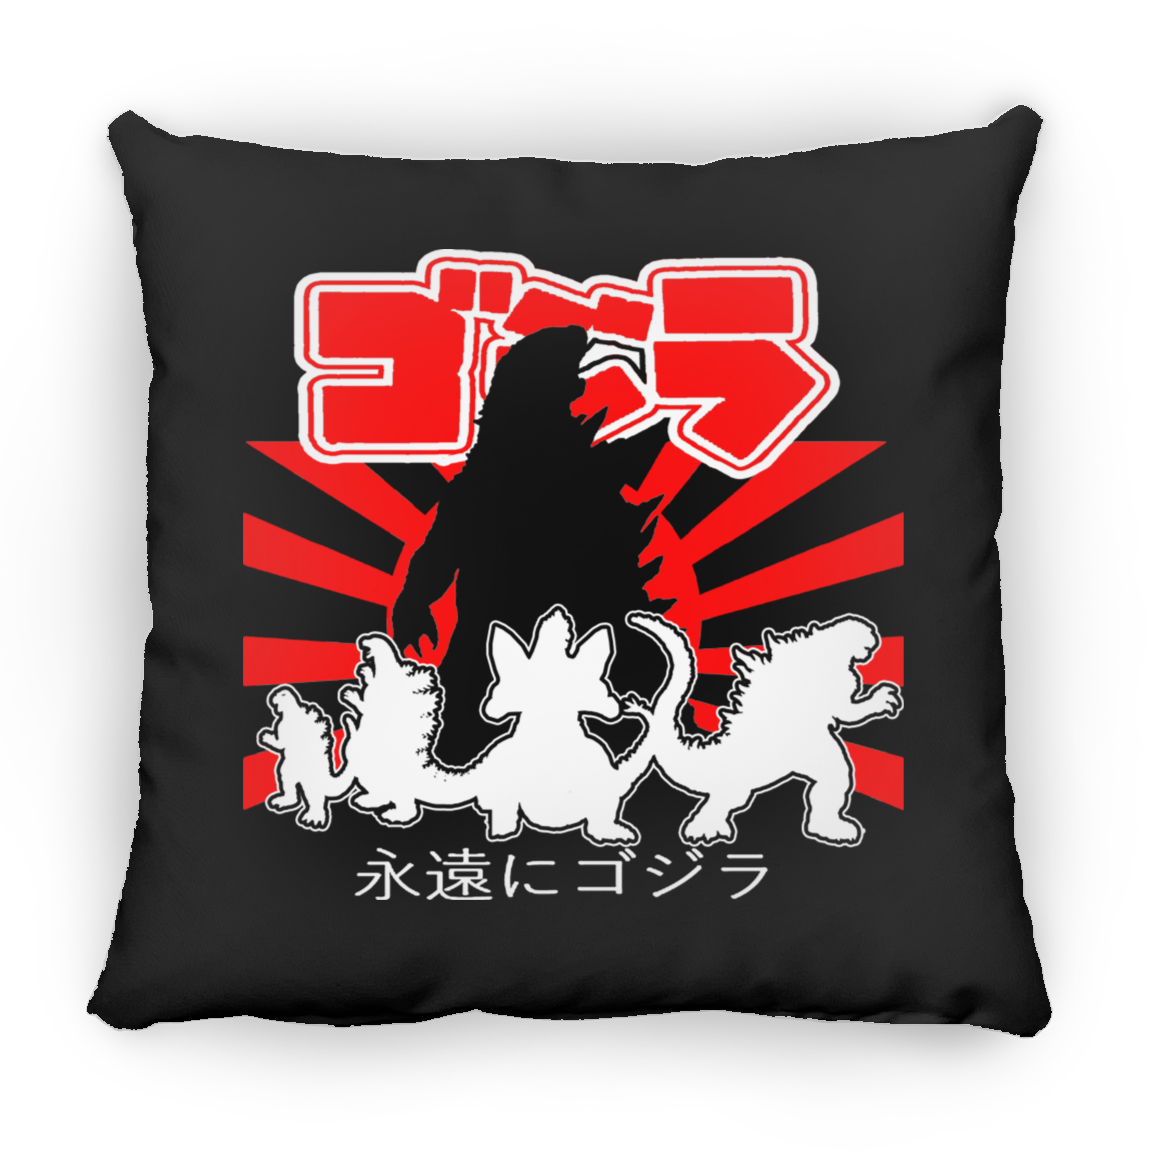 ArtichokeUSA Custom Design. Godzilla. Long Live the King. (1954 to 2019. 65 Years! Fan Art. Square Pillow 18x18